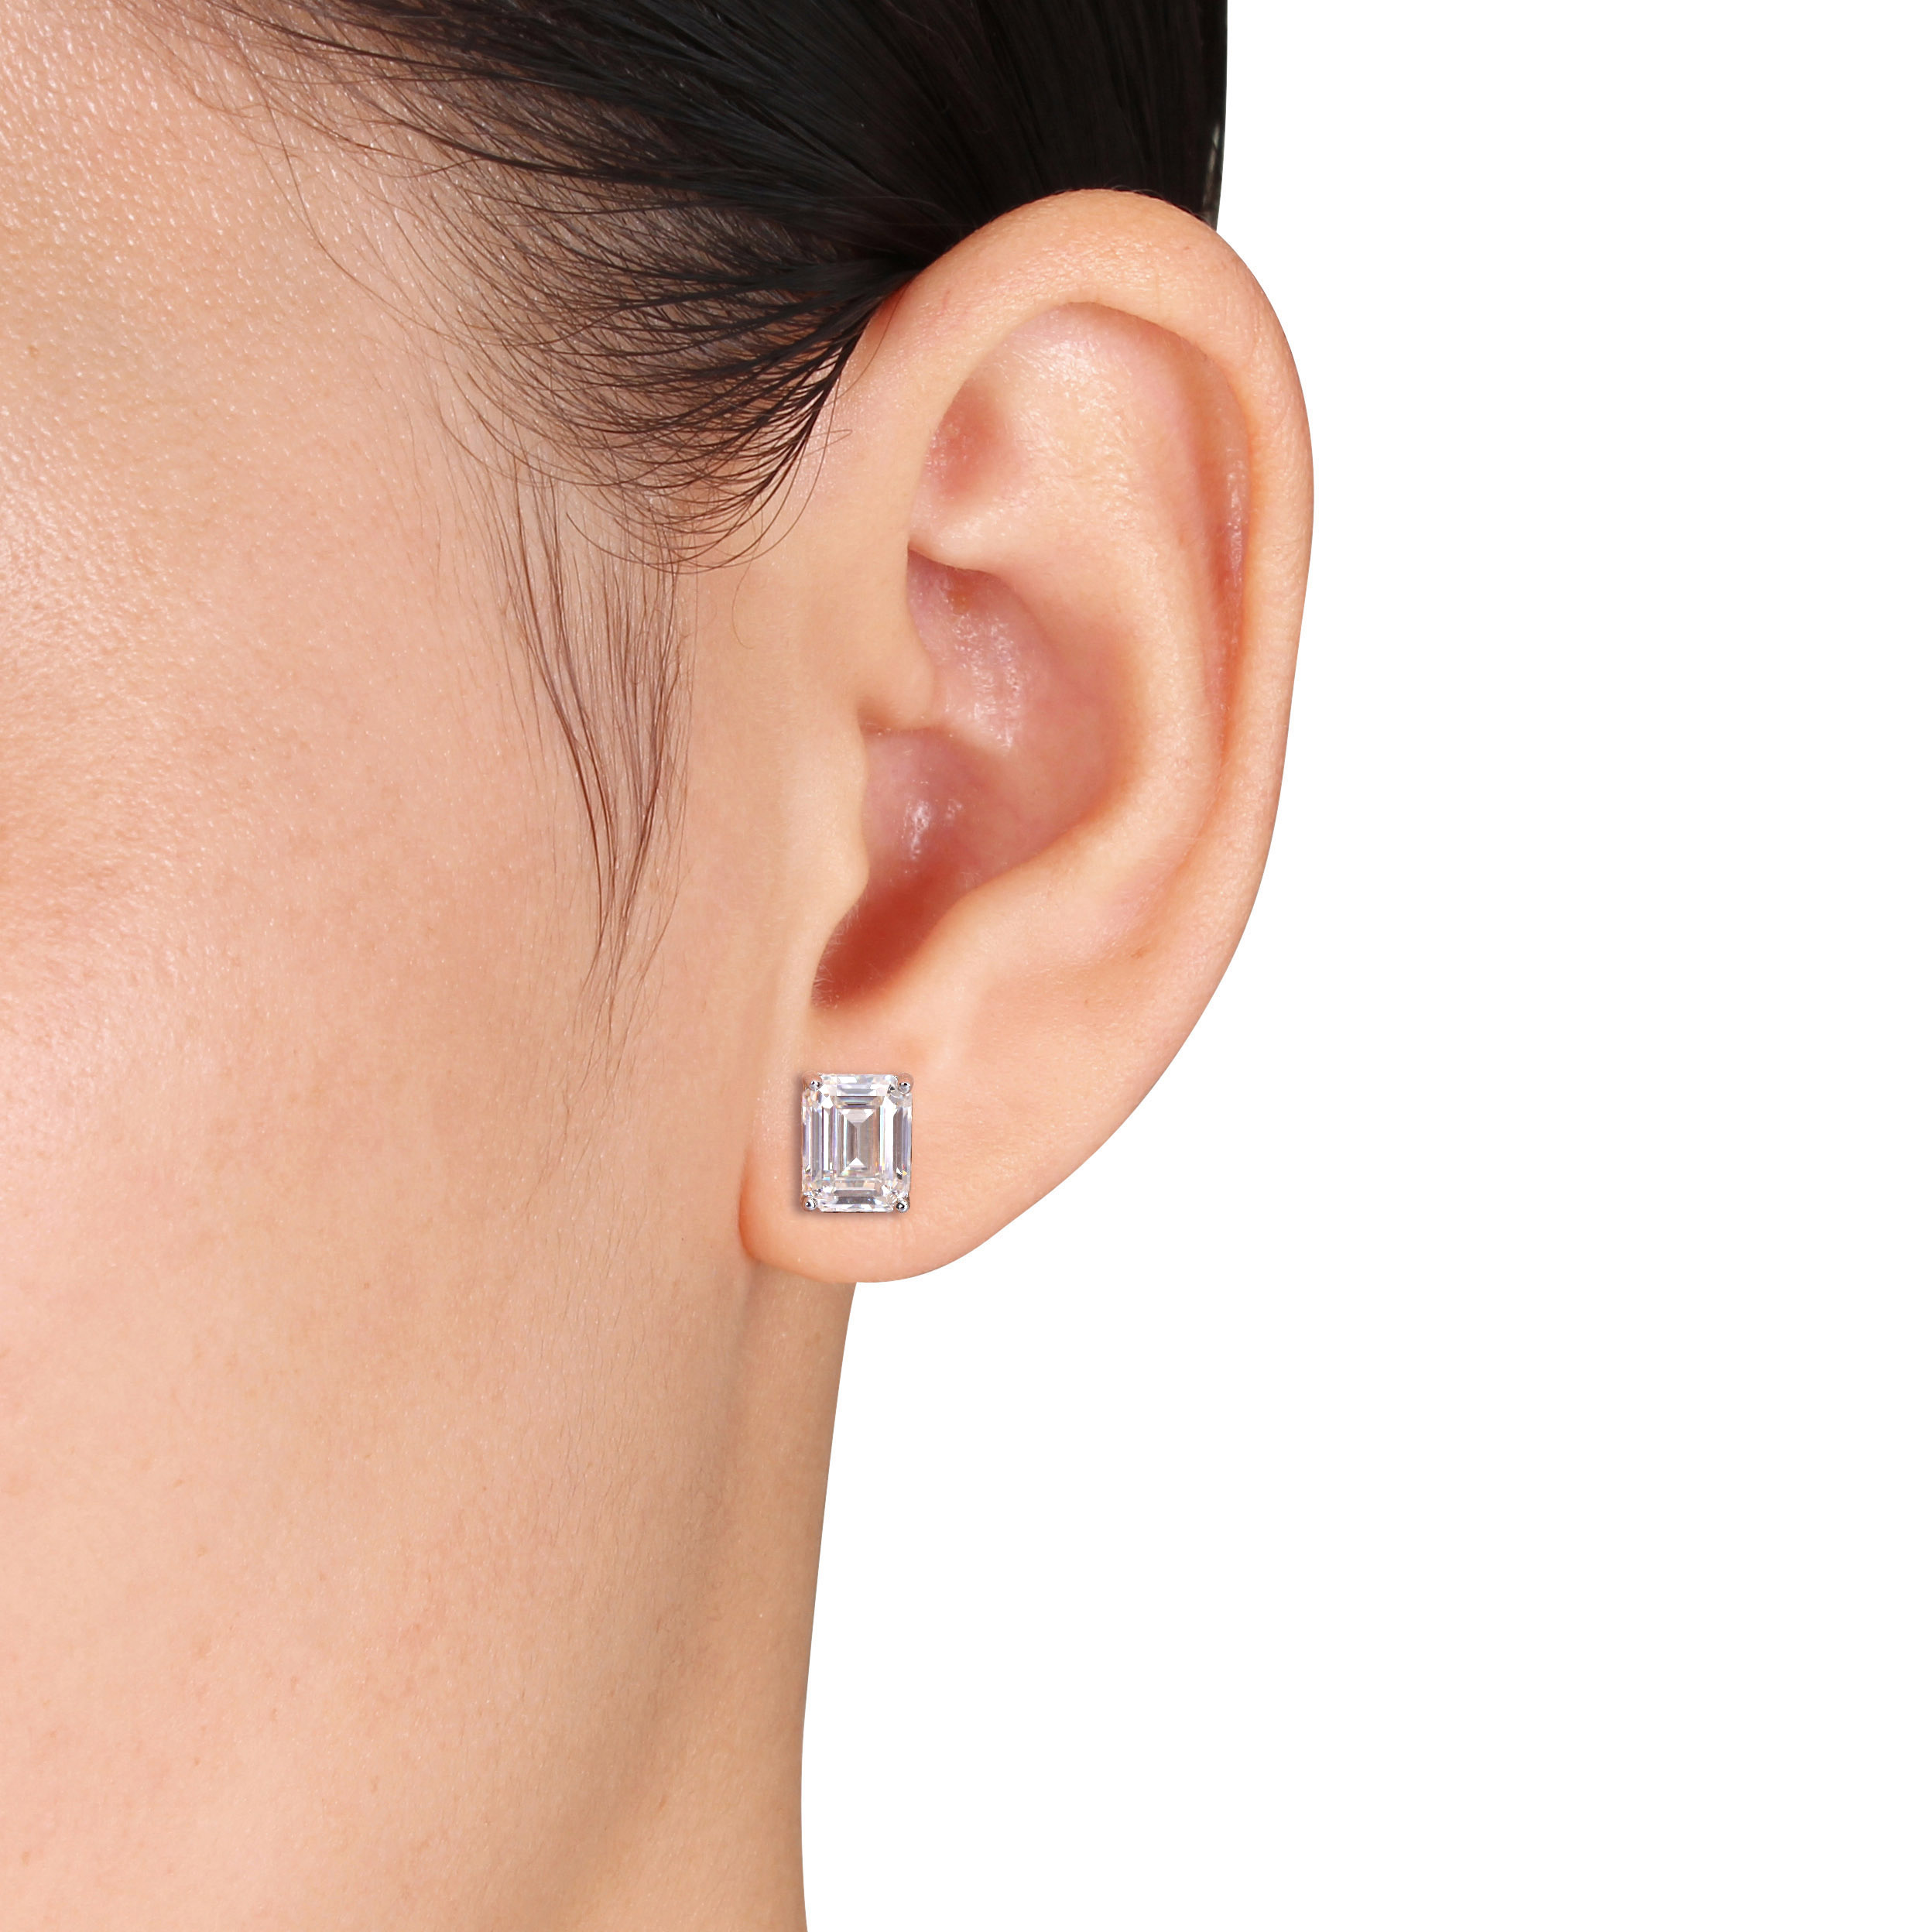 4 4/5 CT TGW Emerald Cut Created Moissanite Stud Earrings in Sterling Silver